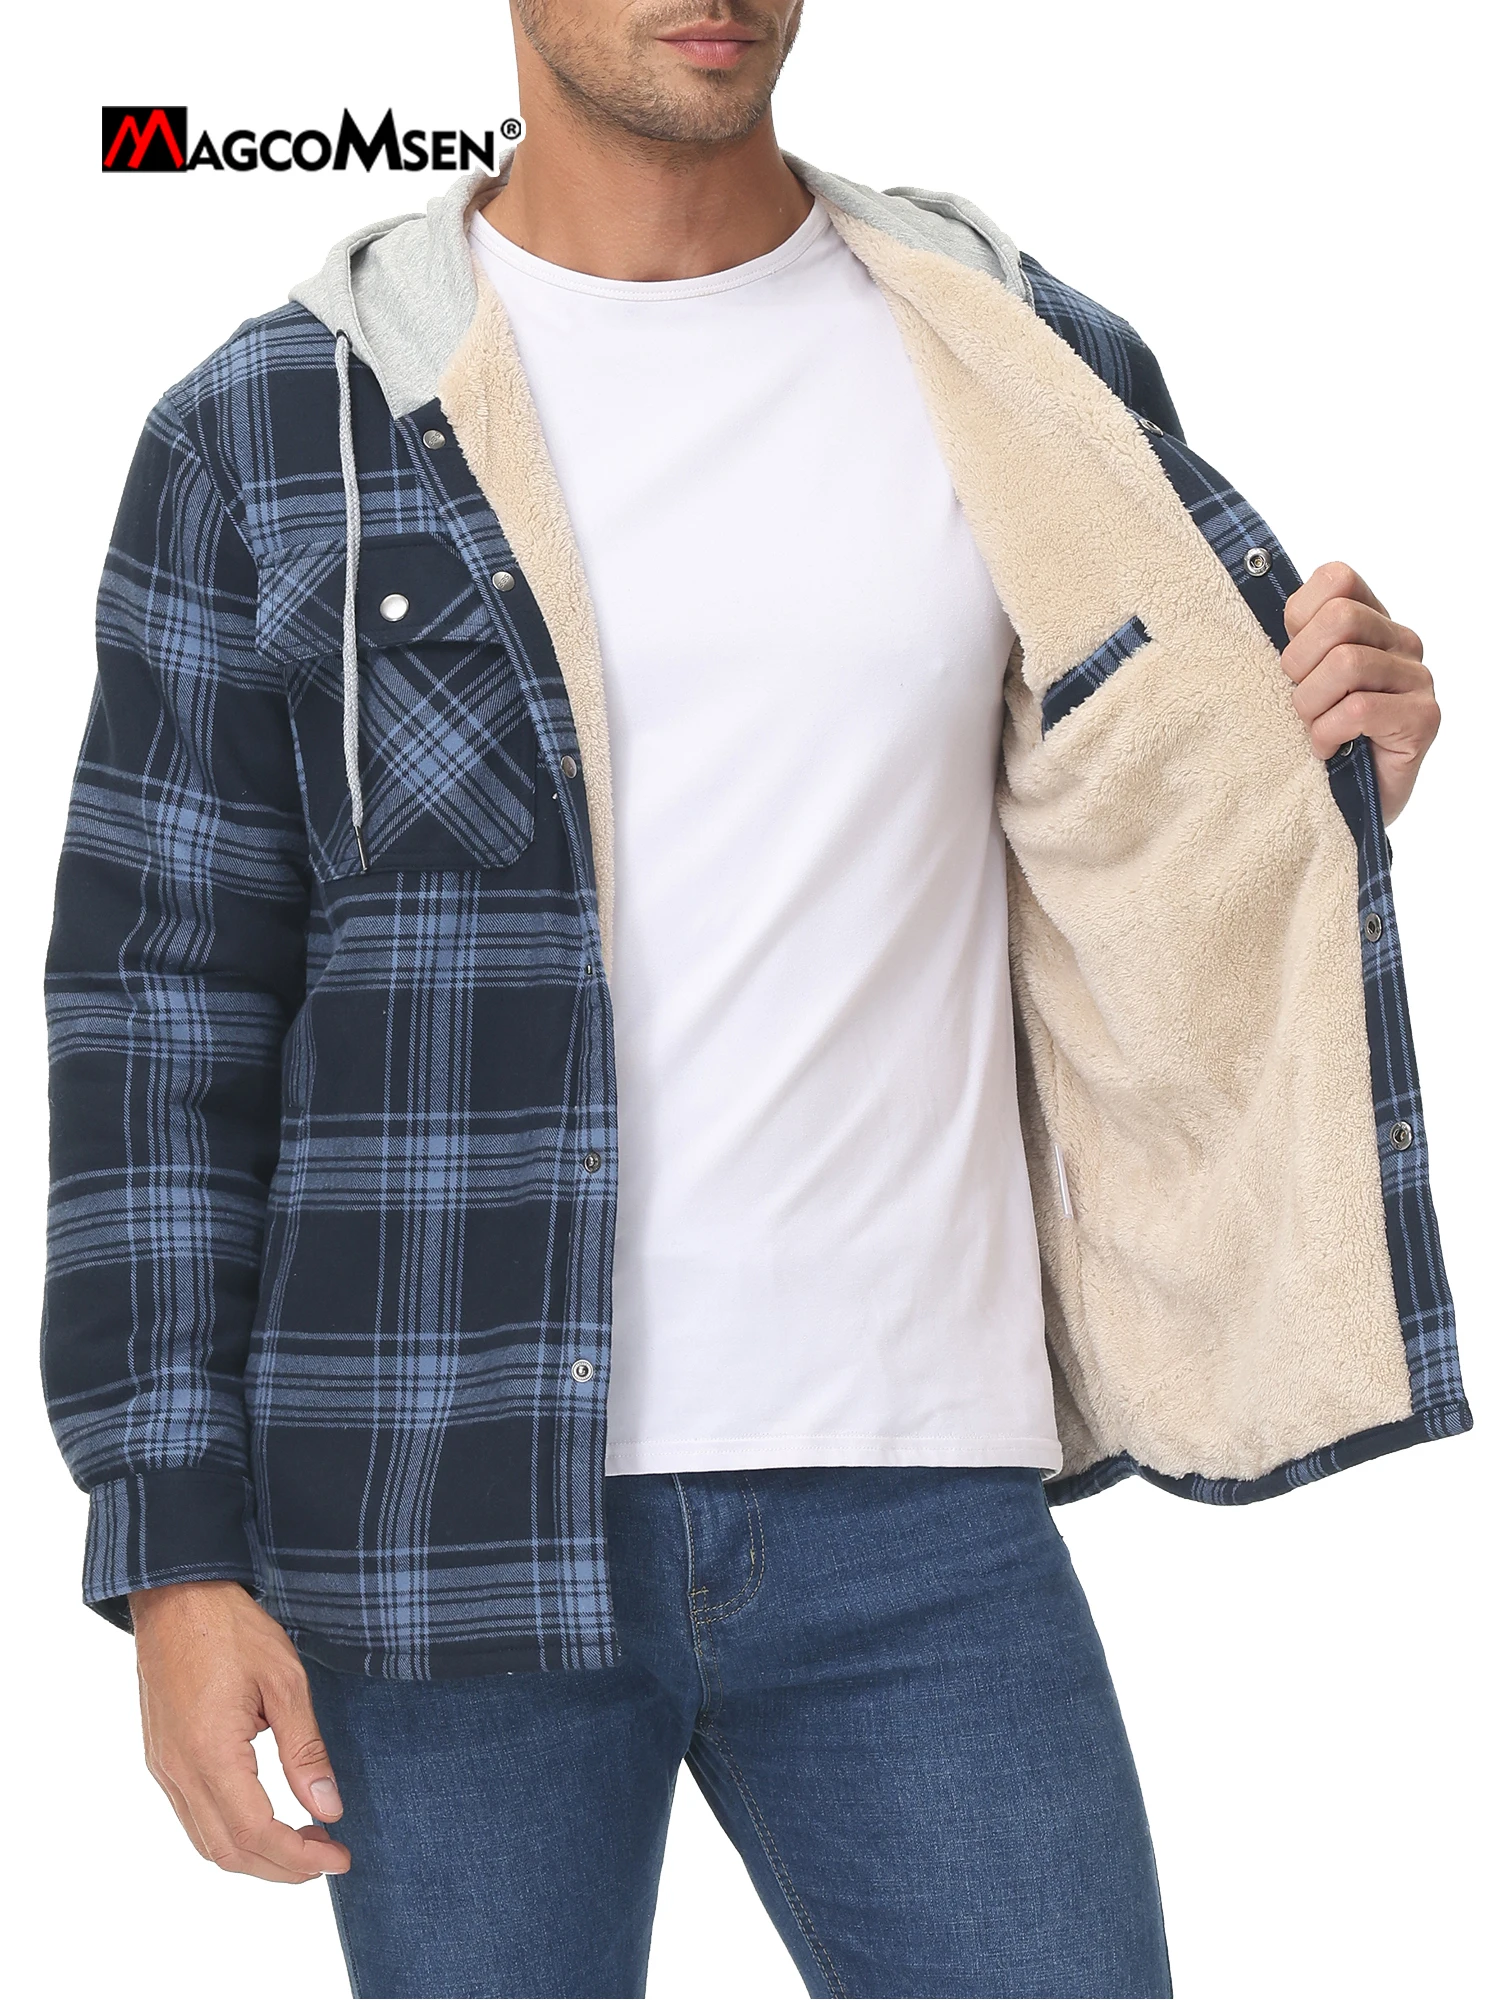 MAGCOMSEN Men's Flannel Jacket